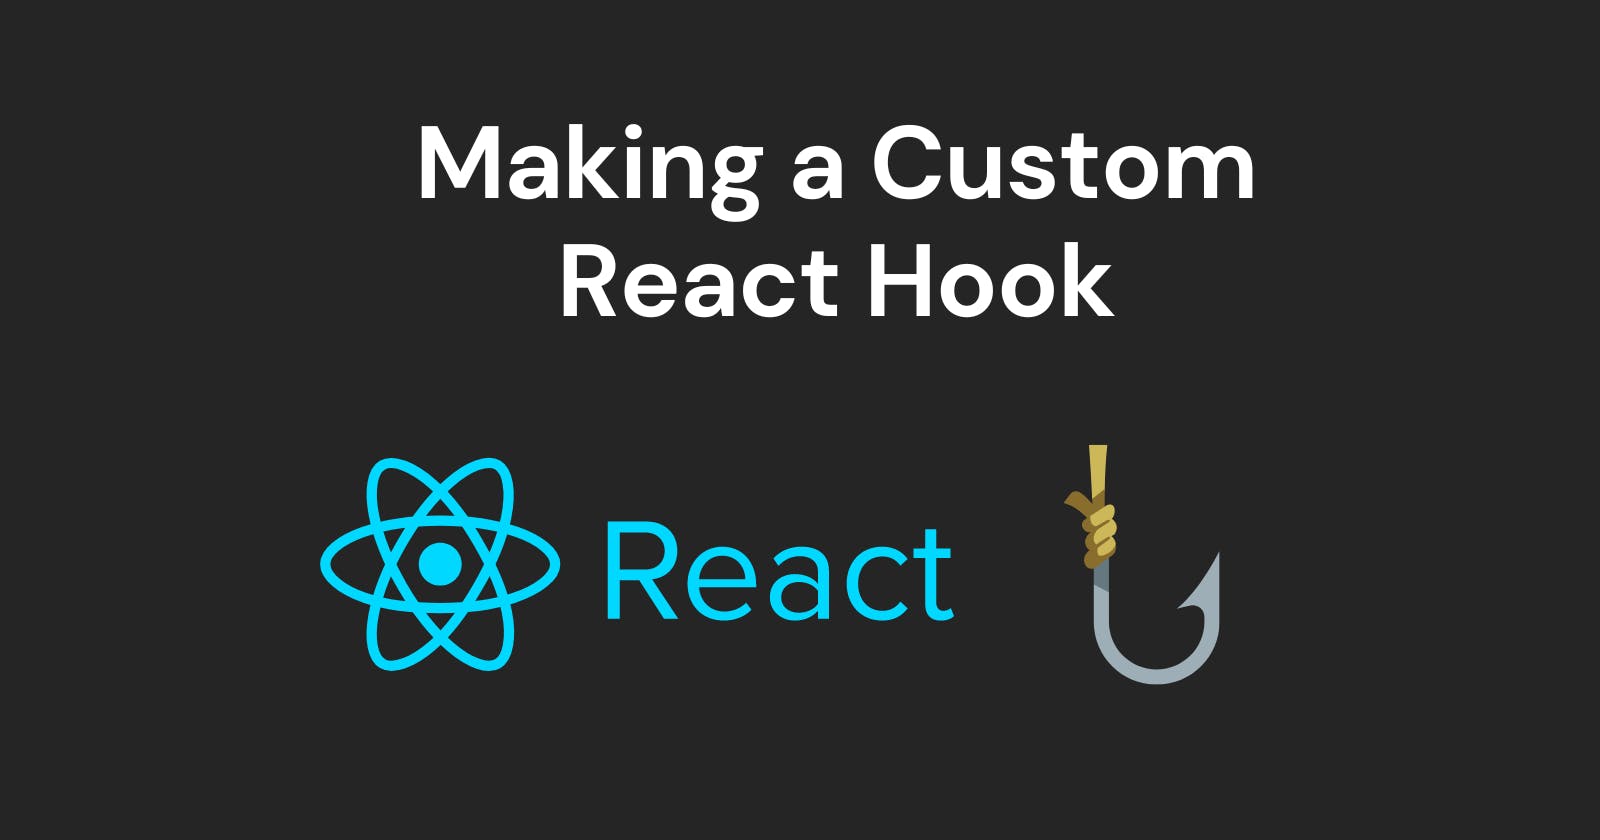 Making a custom React Hook